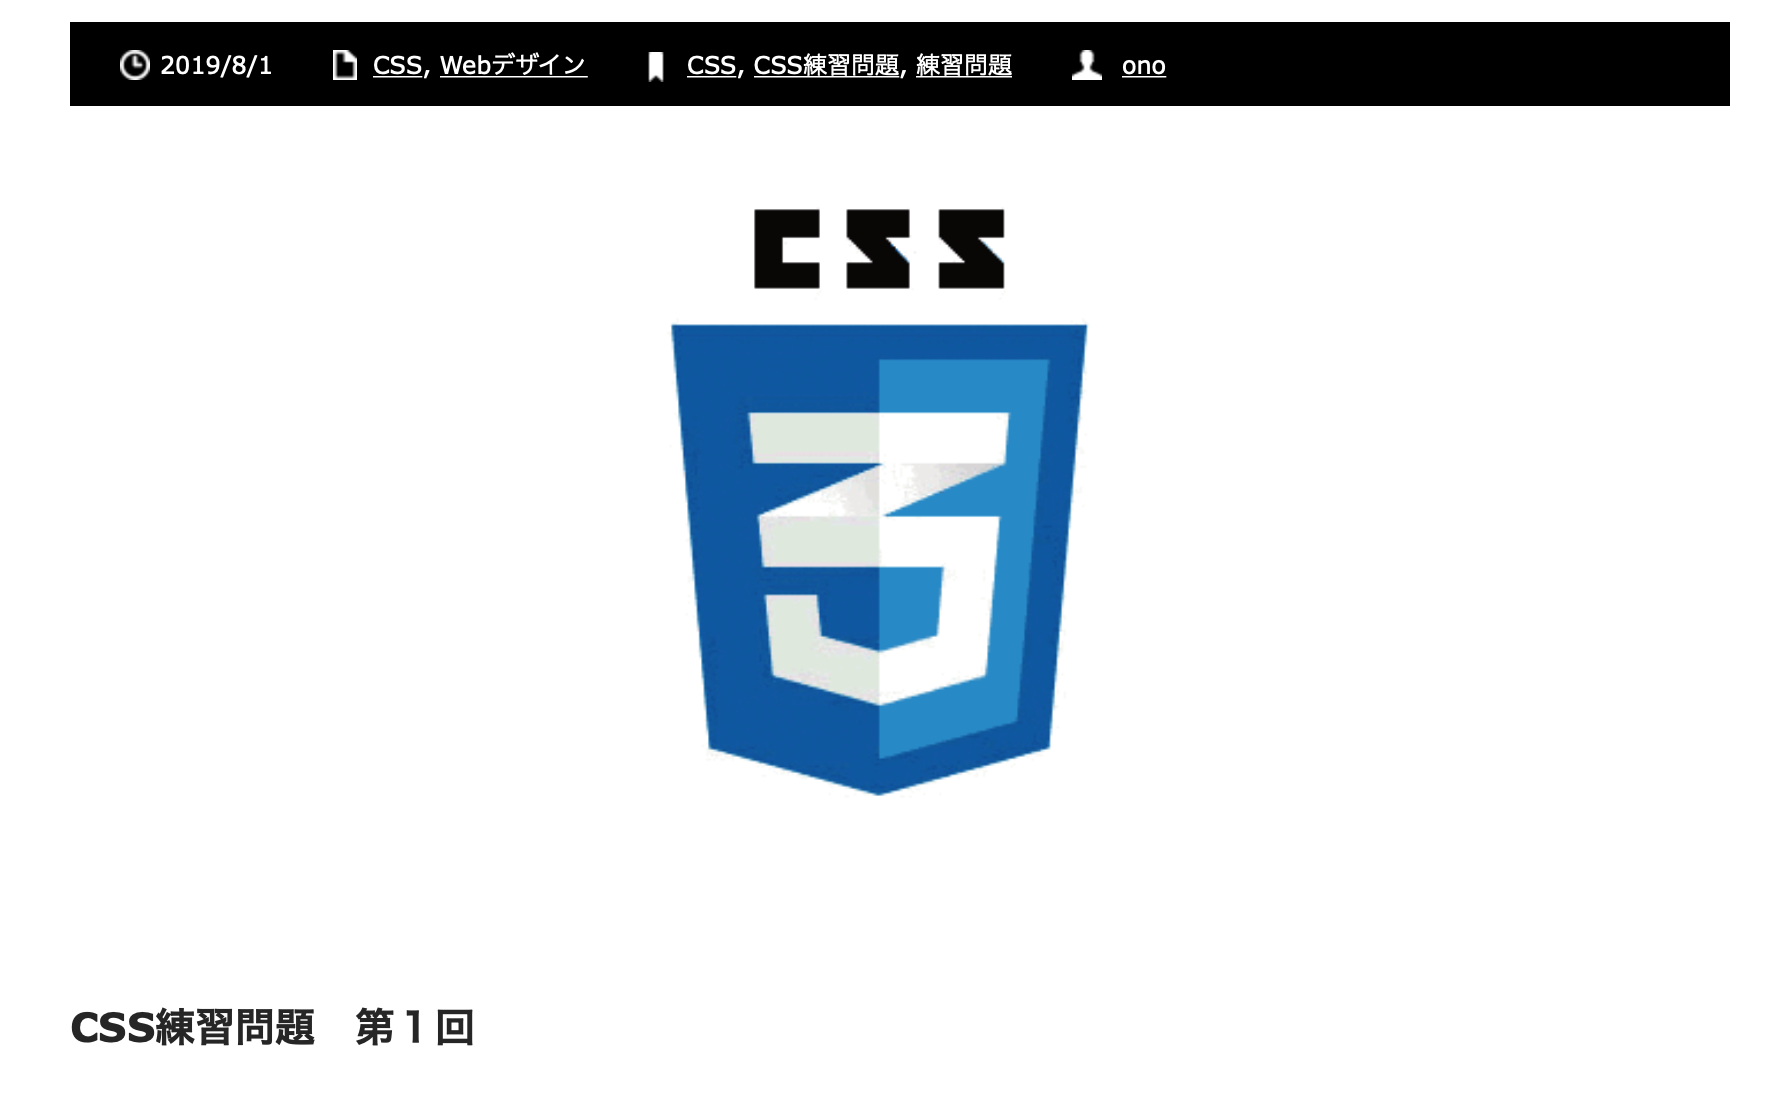 Div lang. CSS. ЦСС. Style CSS. CSS language фон.